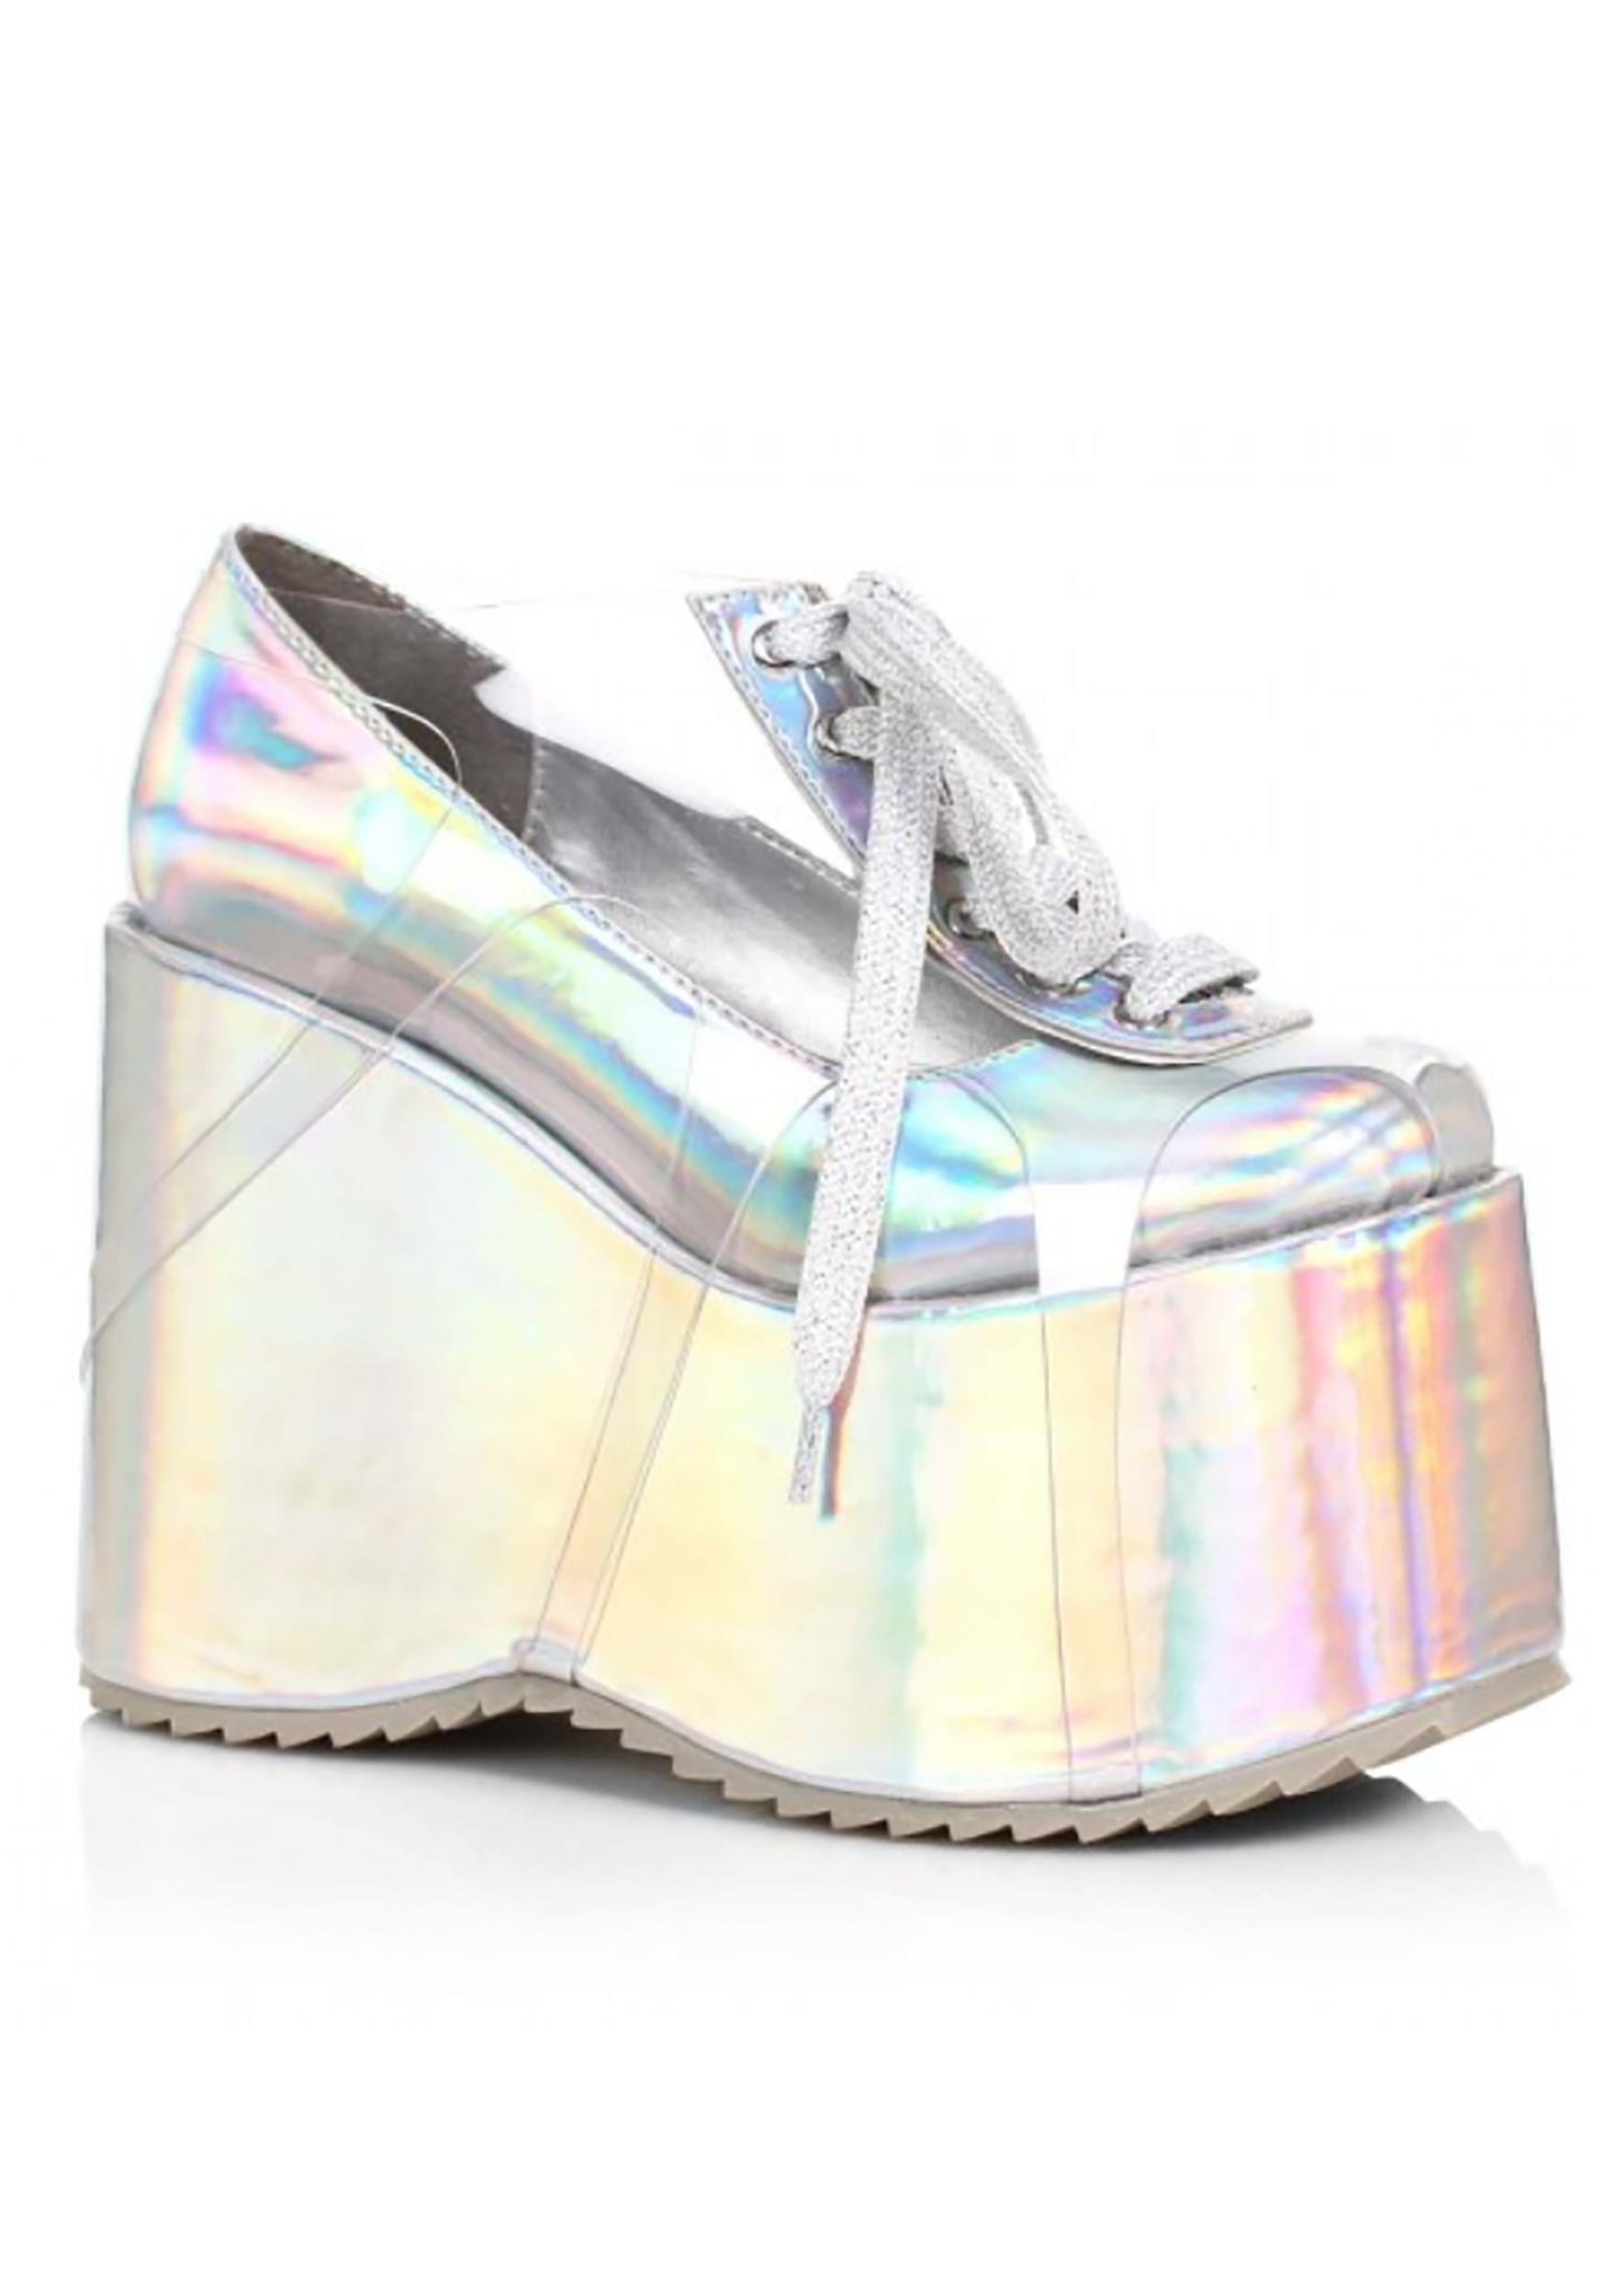 https://images.halloweencostumes.ca/products/81864/1-1/womens-hologram-platform-shoes.jpg